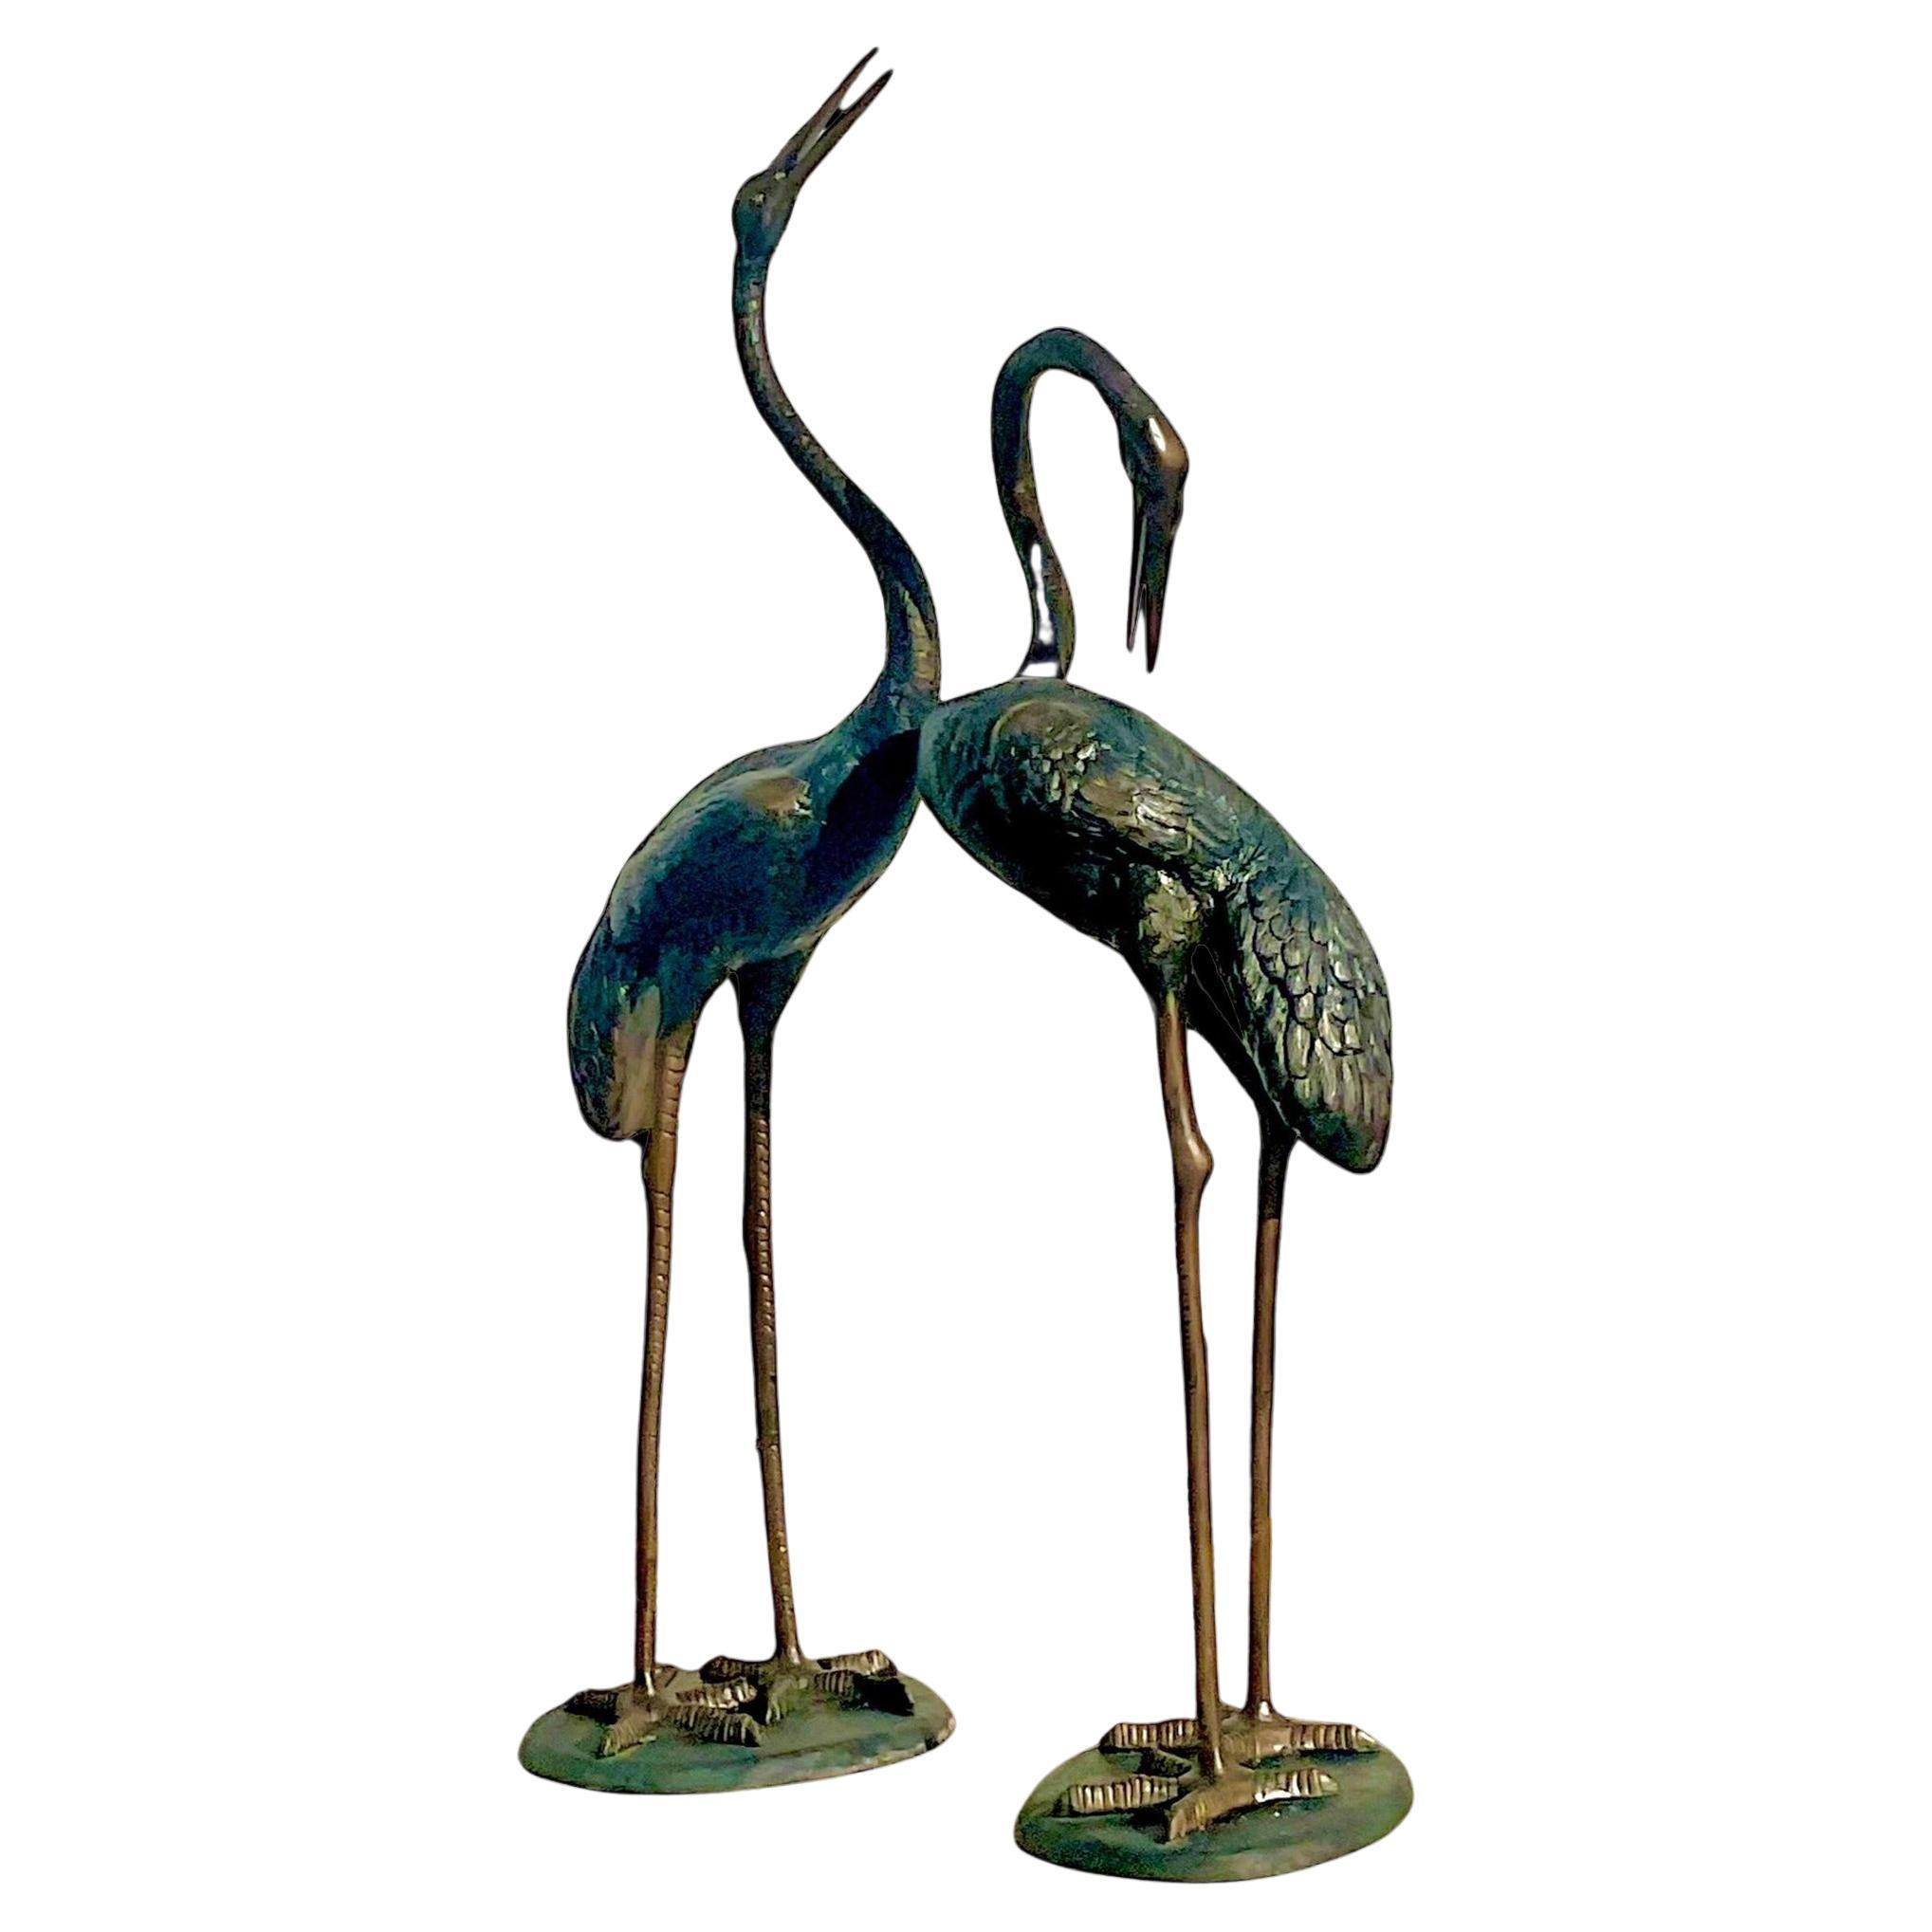 Vintage Boho Monumental Patinated Bronze Cranes - Set of 2